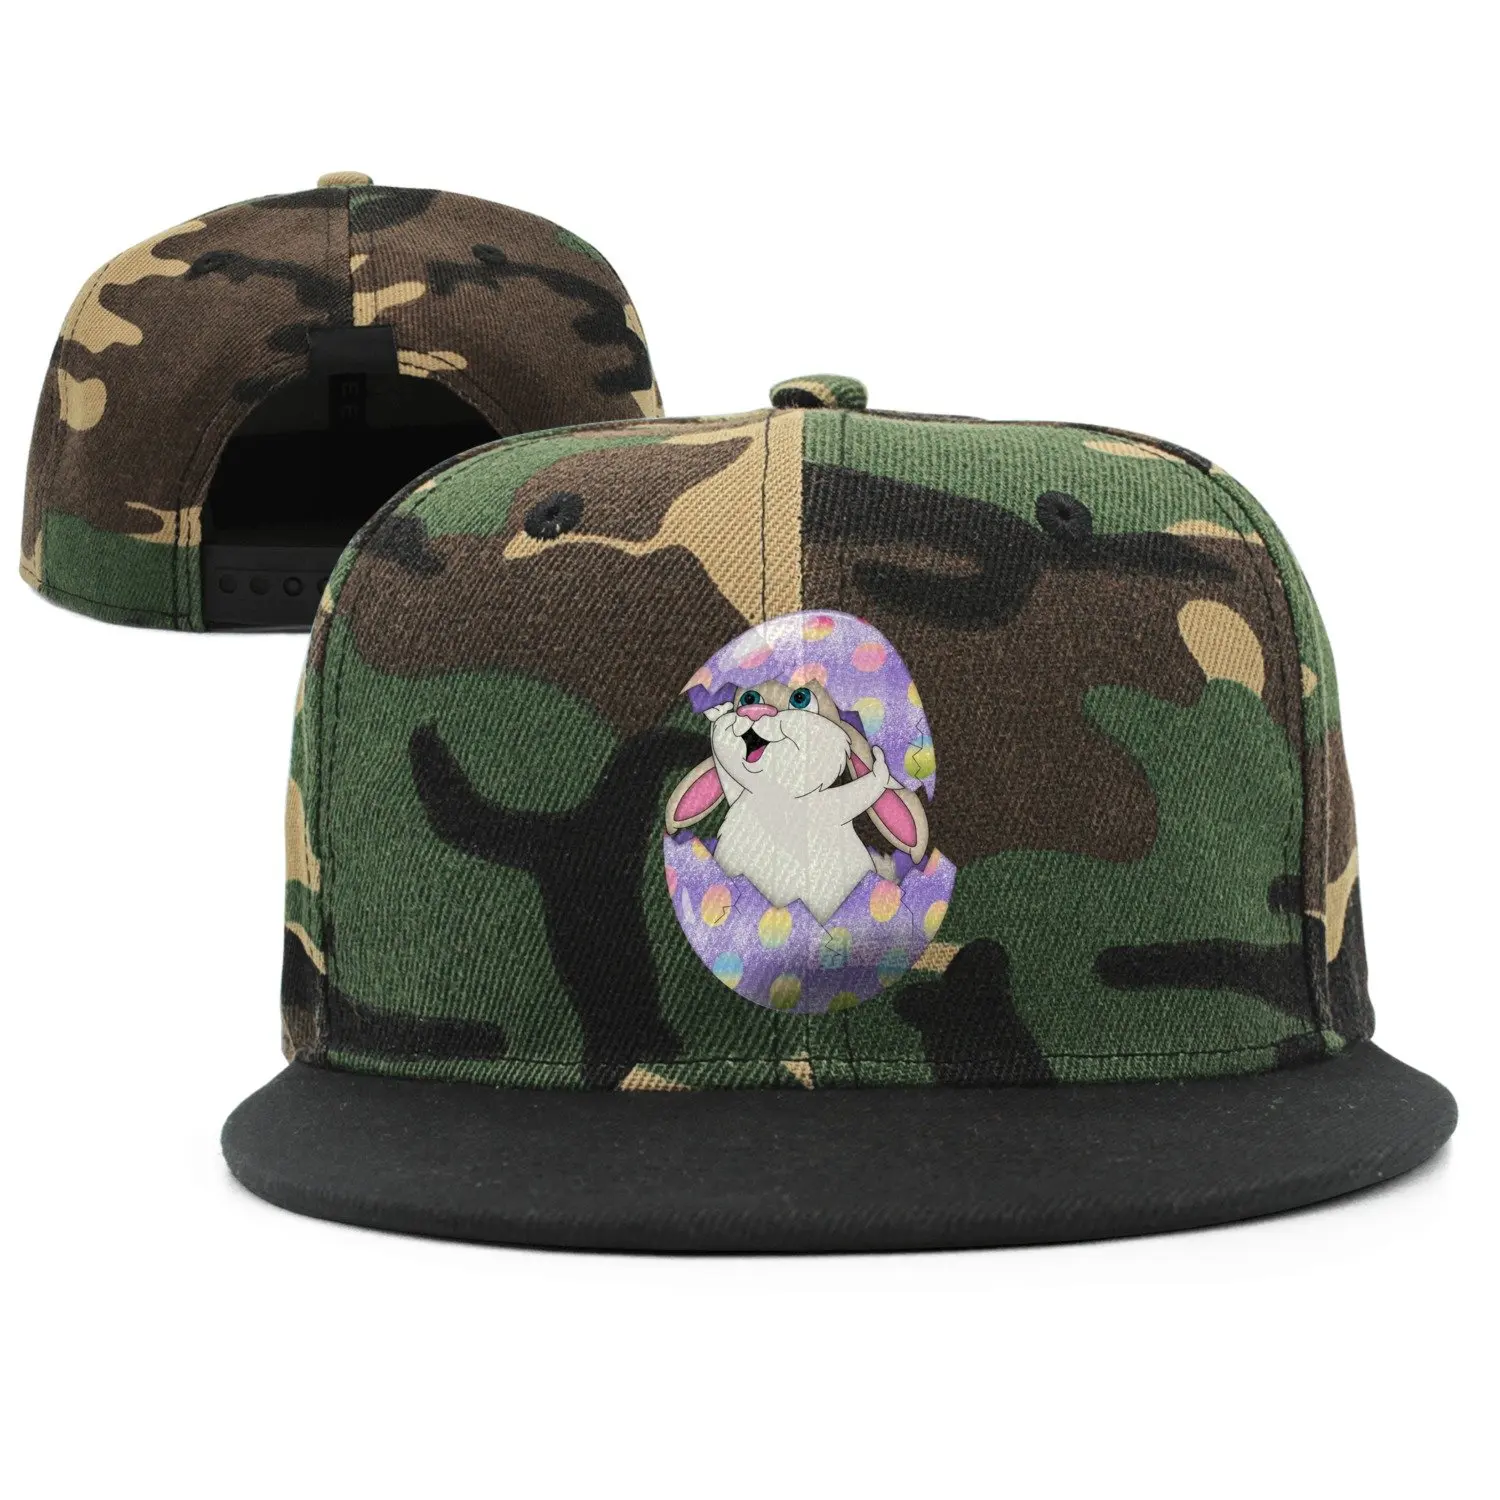 

SJSNBZ Easter Eggs Rabbit Breathable Unisex Adult Mens Camouflage Flat Brim Hats